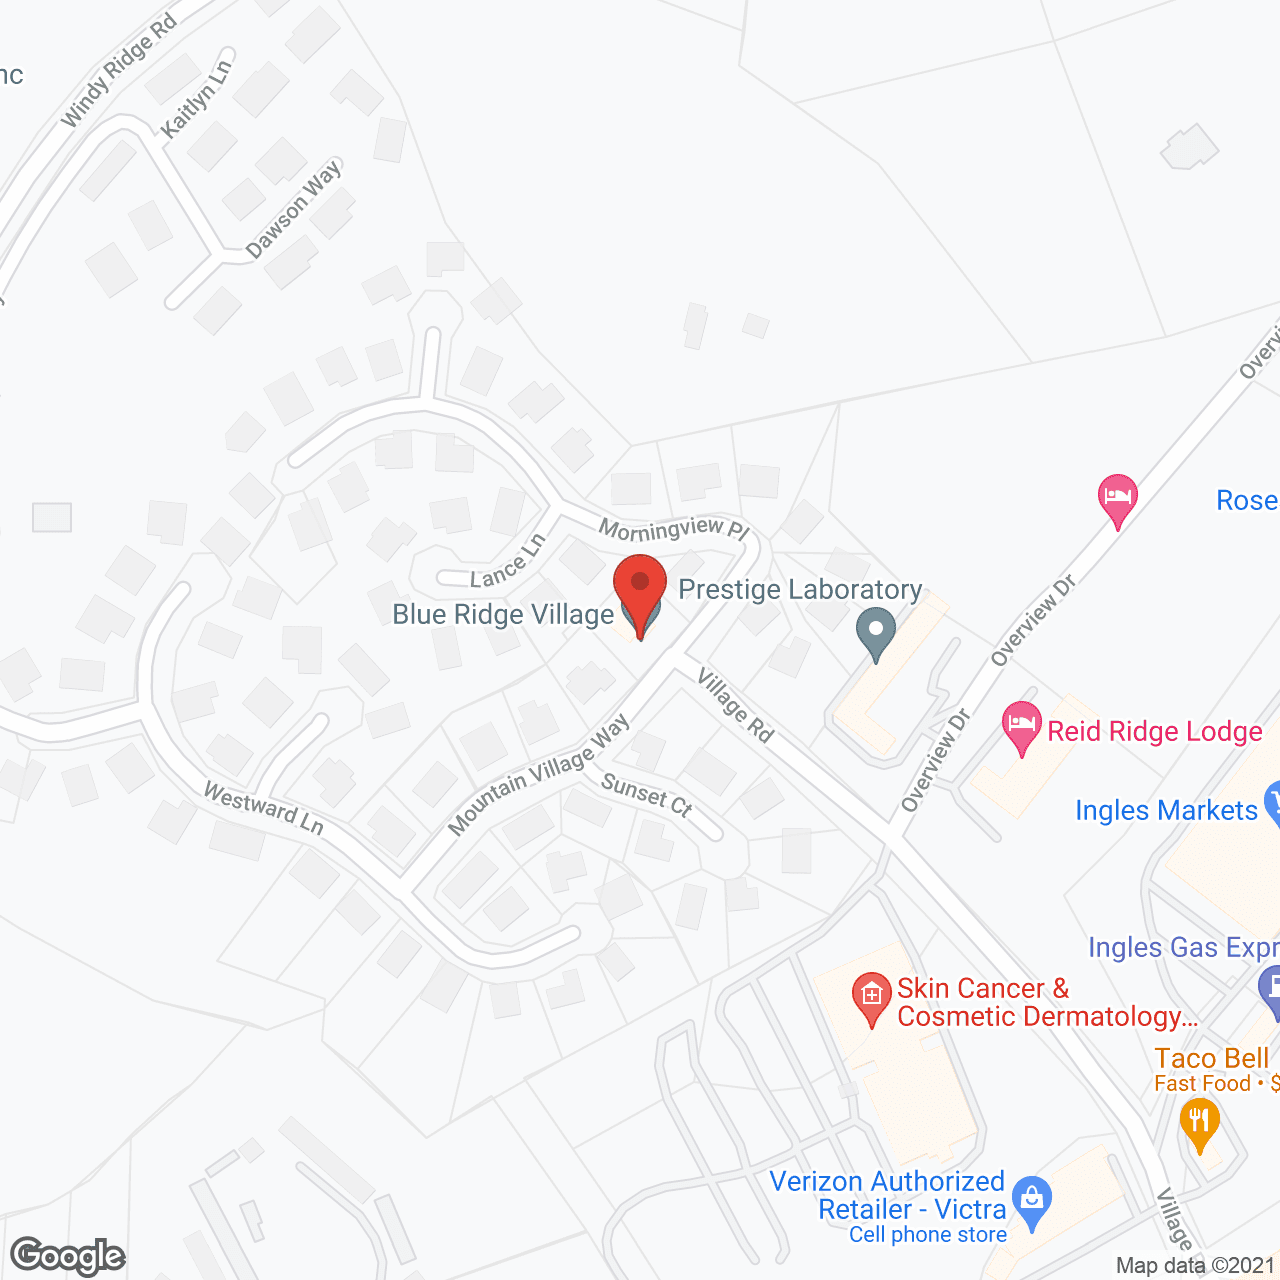 Blue Ridge Village in google map